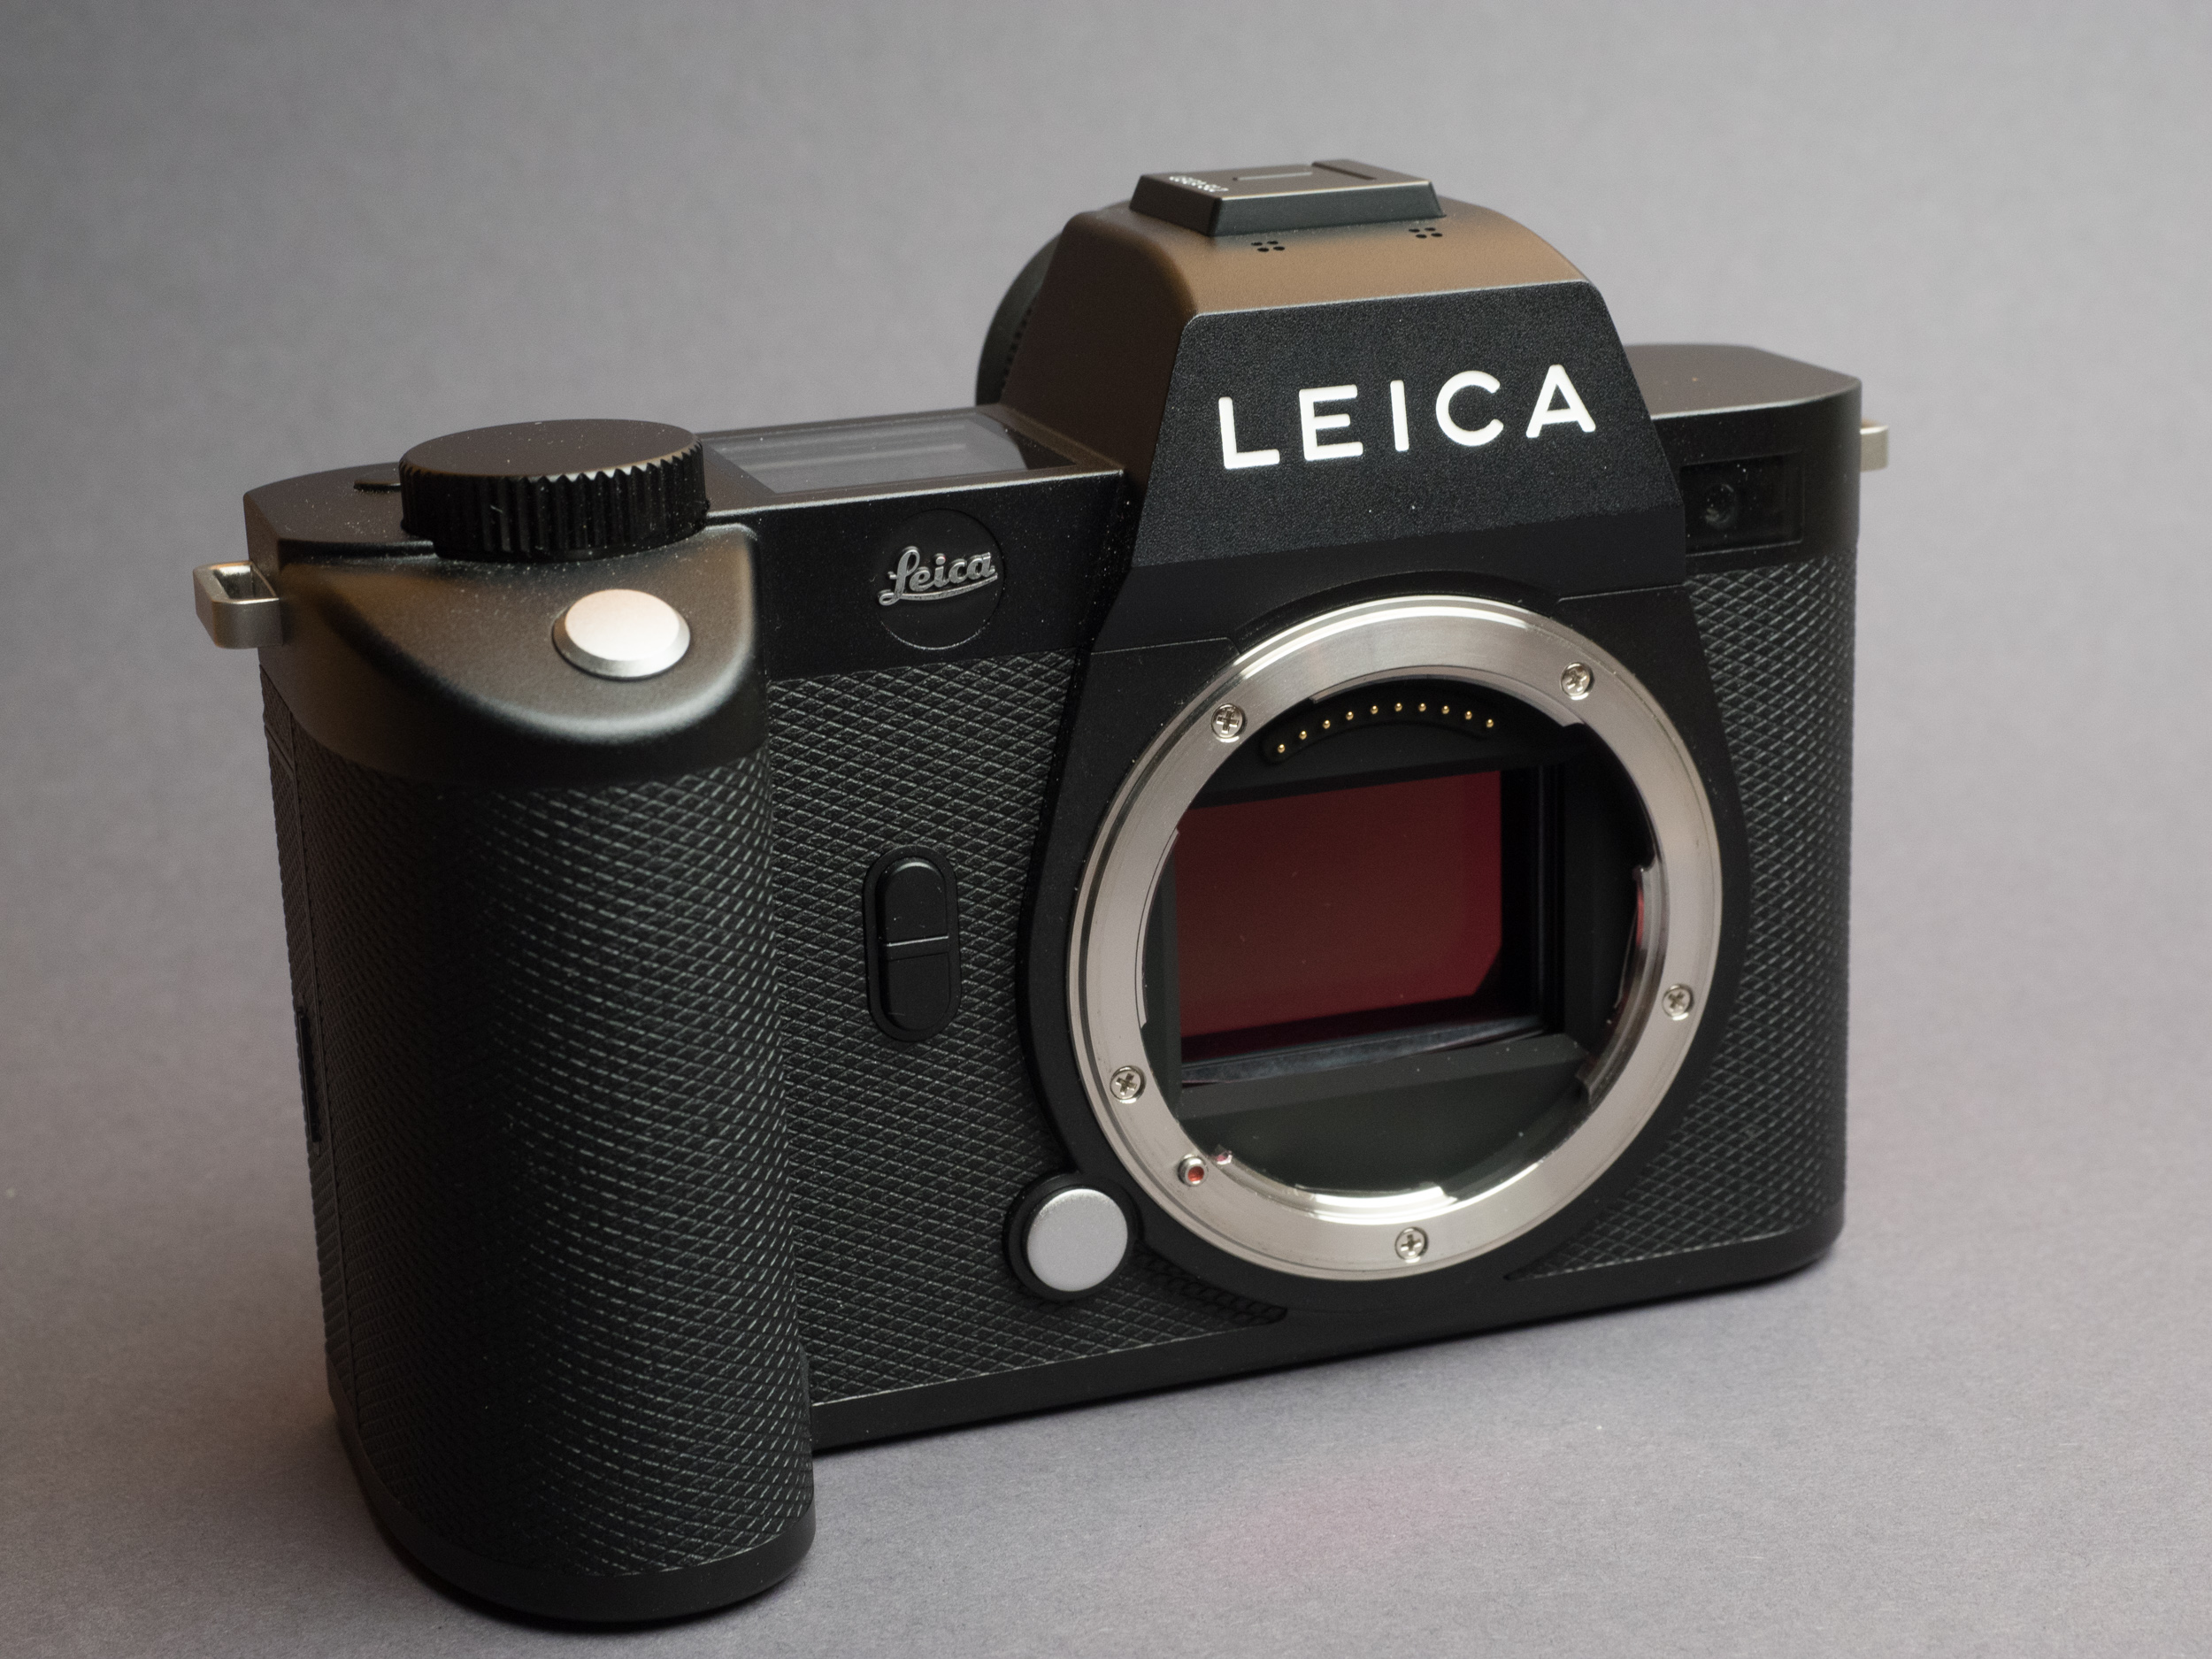 Leica SL2, an option for Leica APS-C lenses